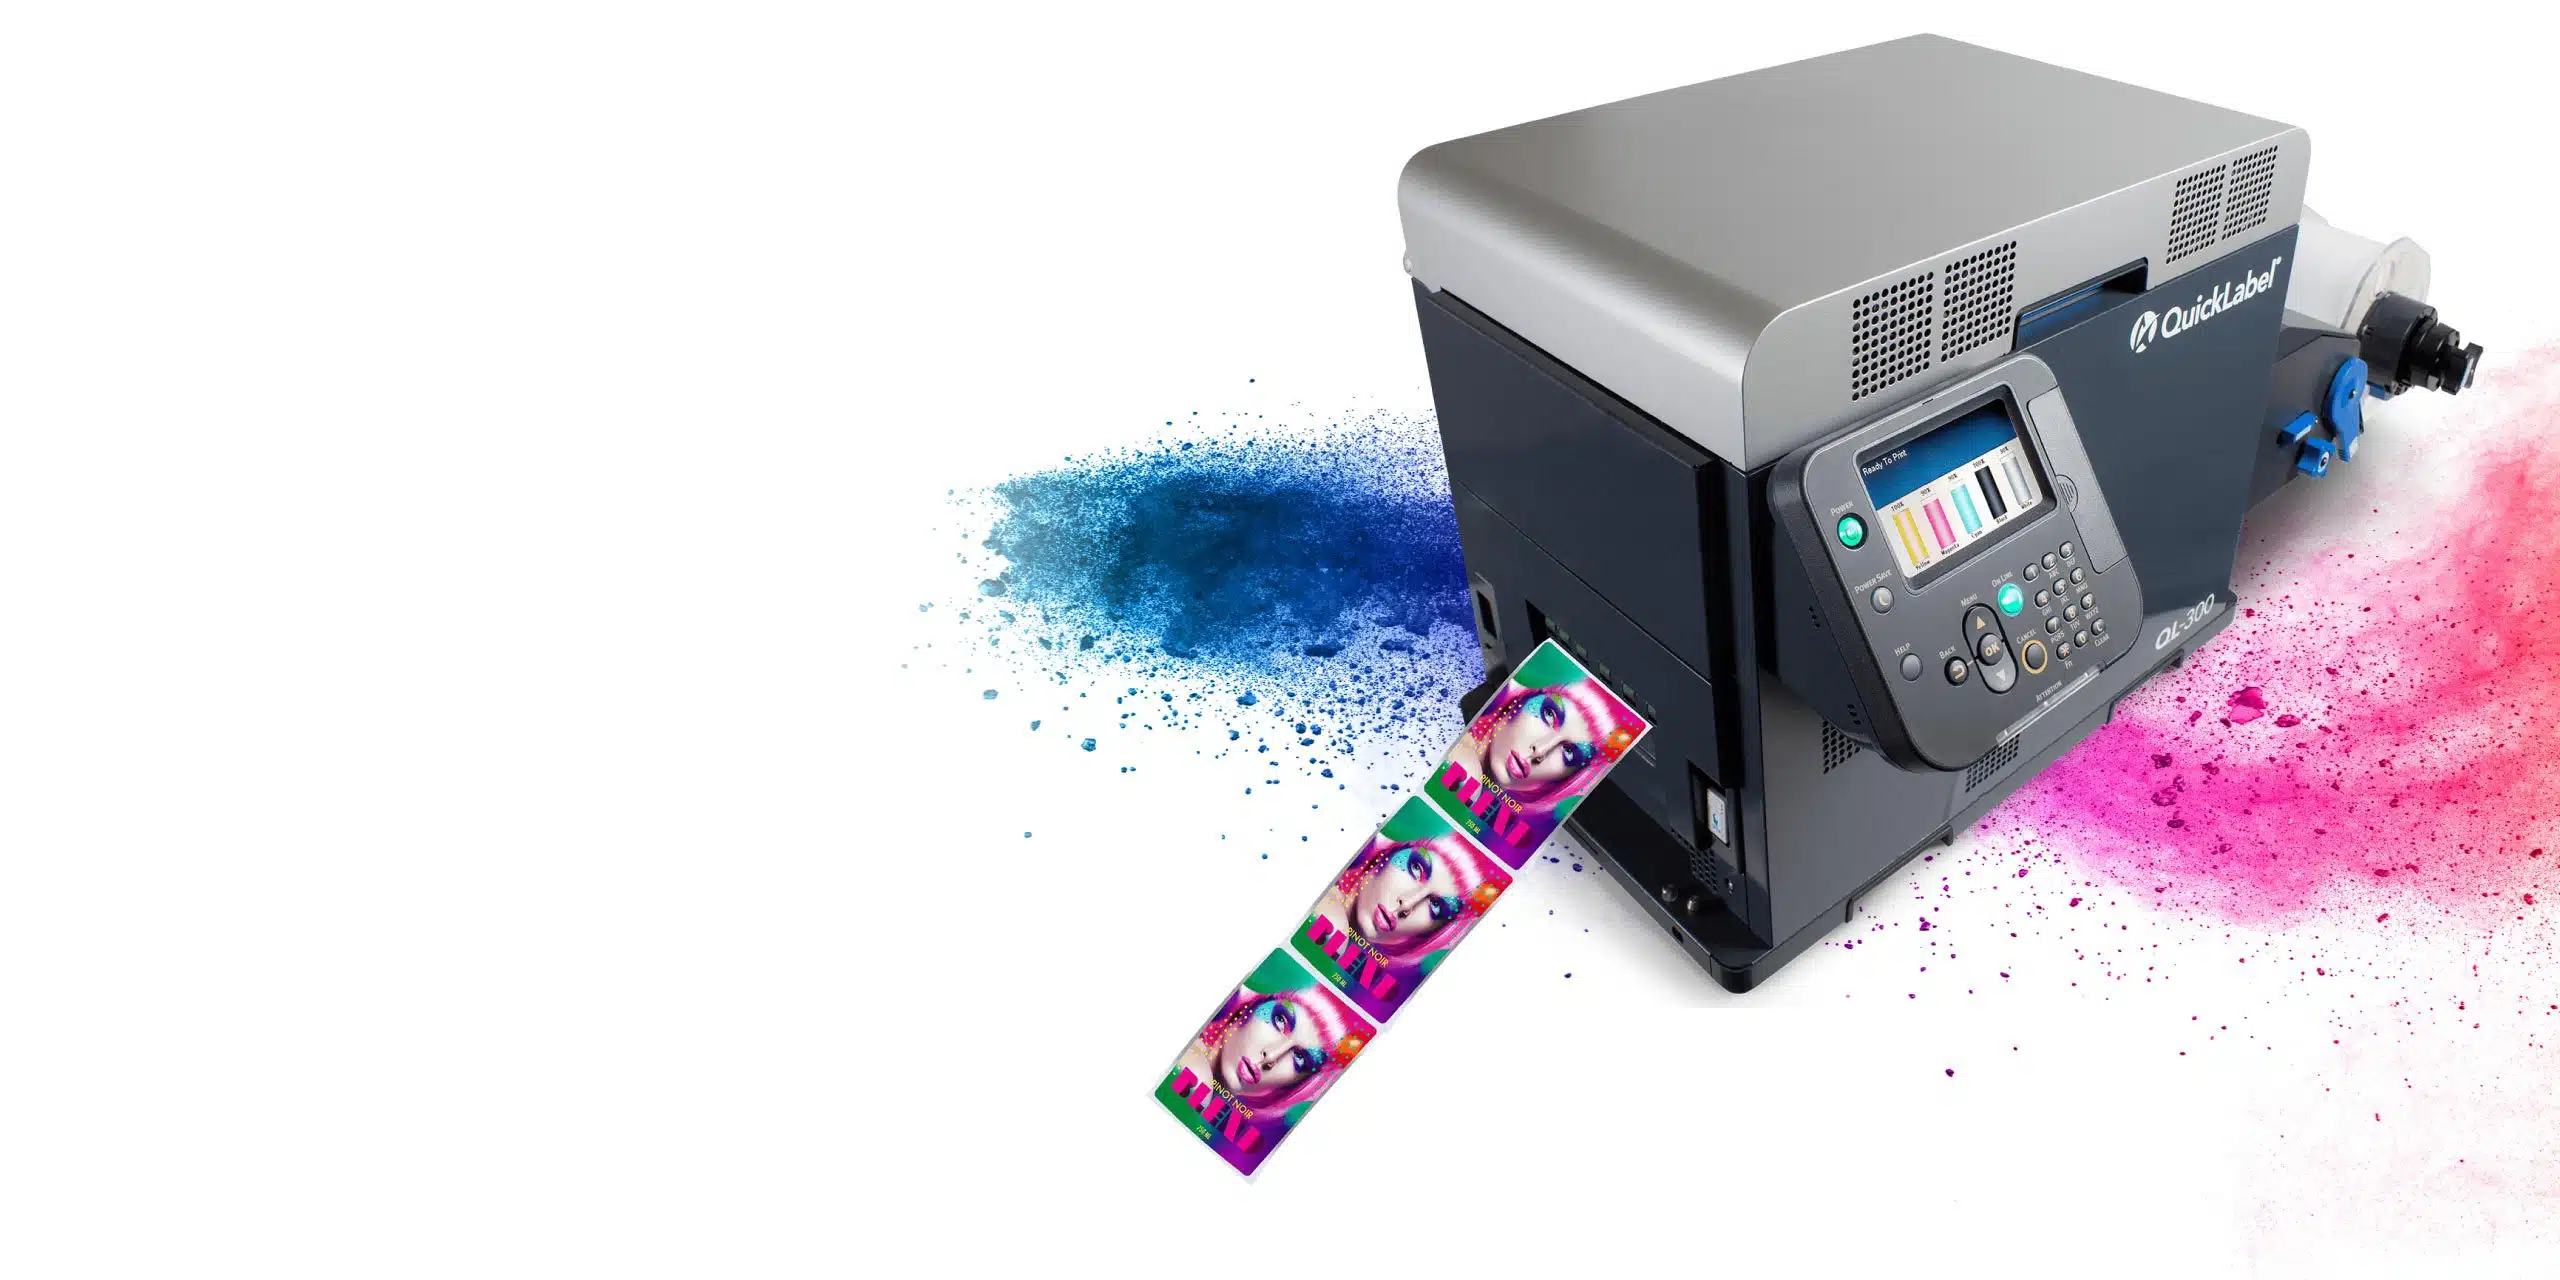 QL-300 Five-Color Label Printer - AstroNova Product Identification